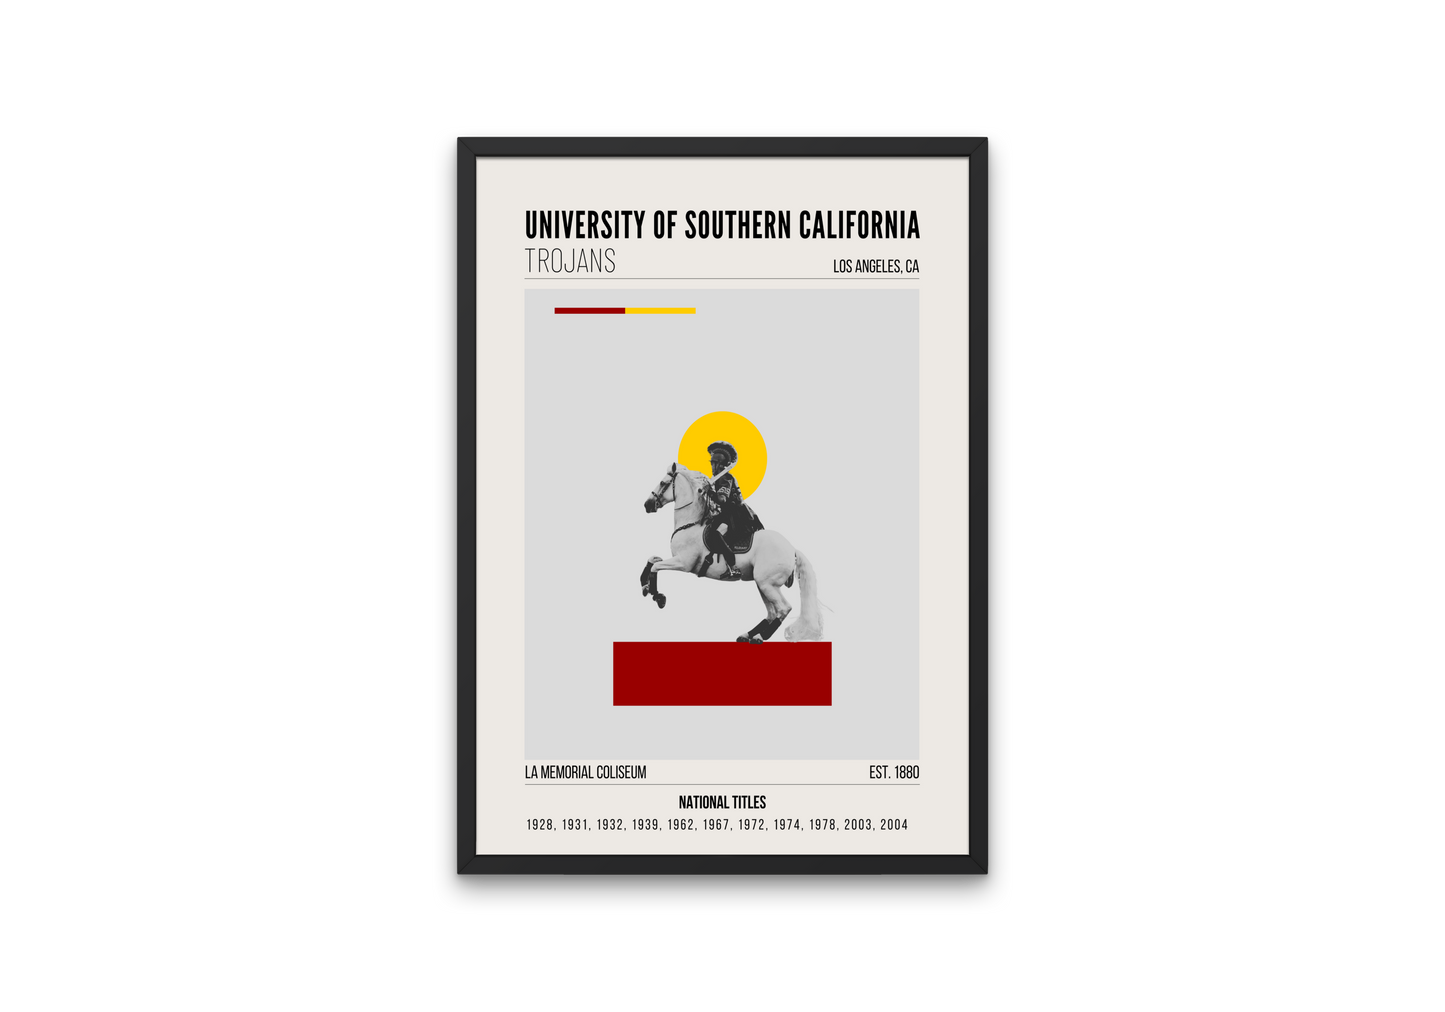 University of Southern California Trojans Mid-Century Modern College Football Poster